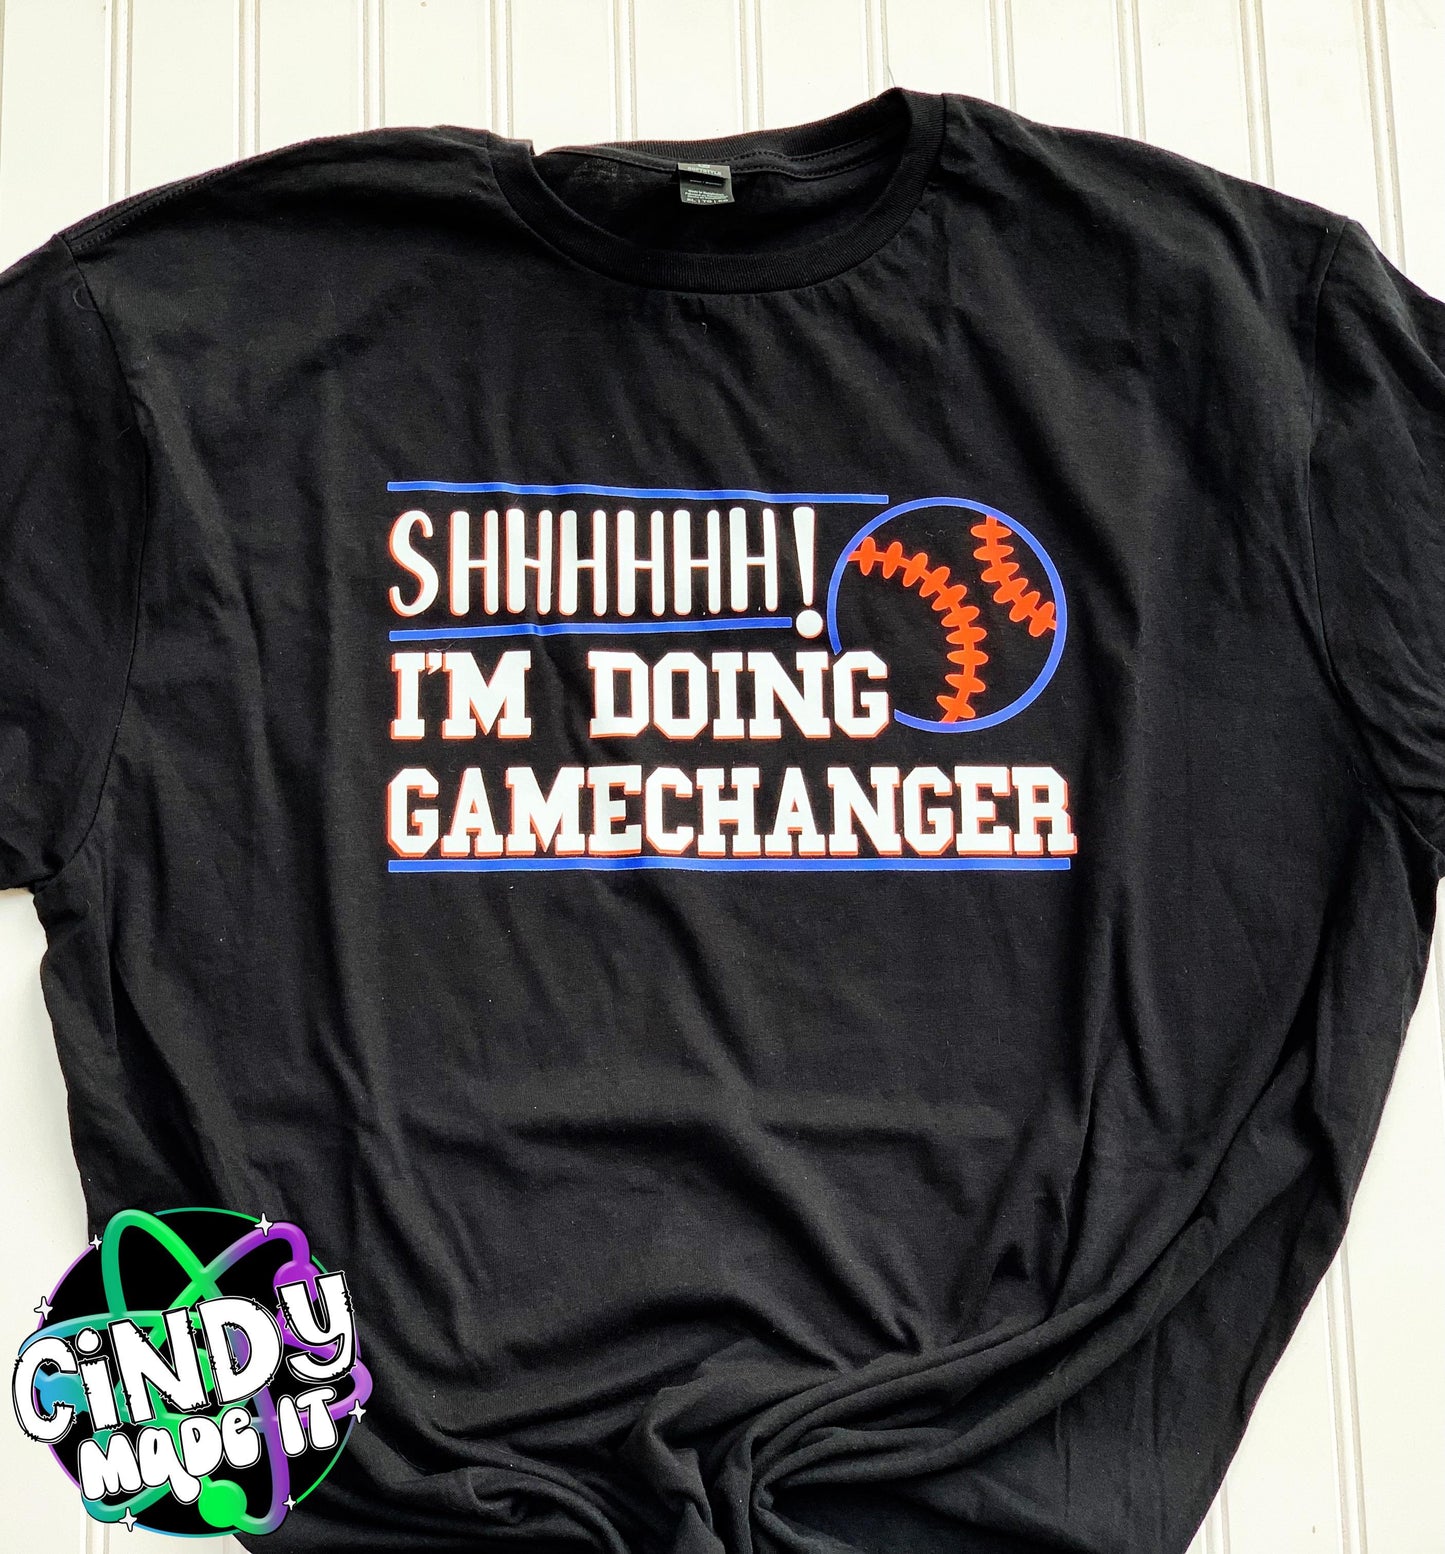 GameChanger custom graphic t-shirt